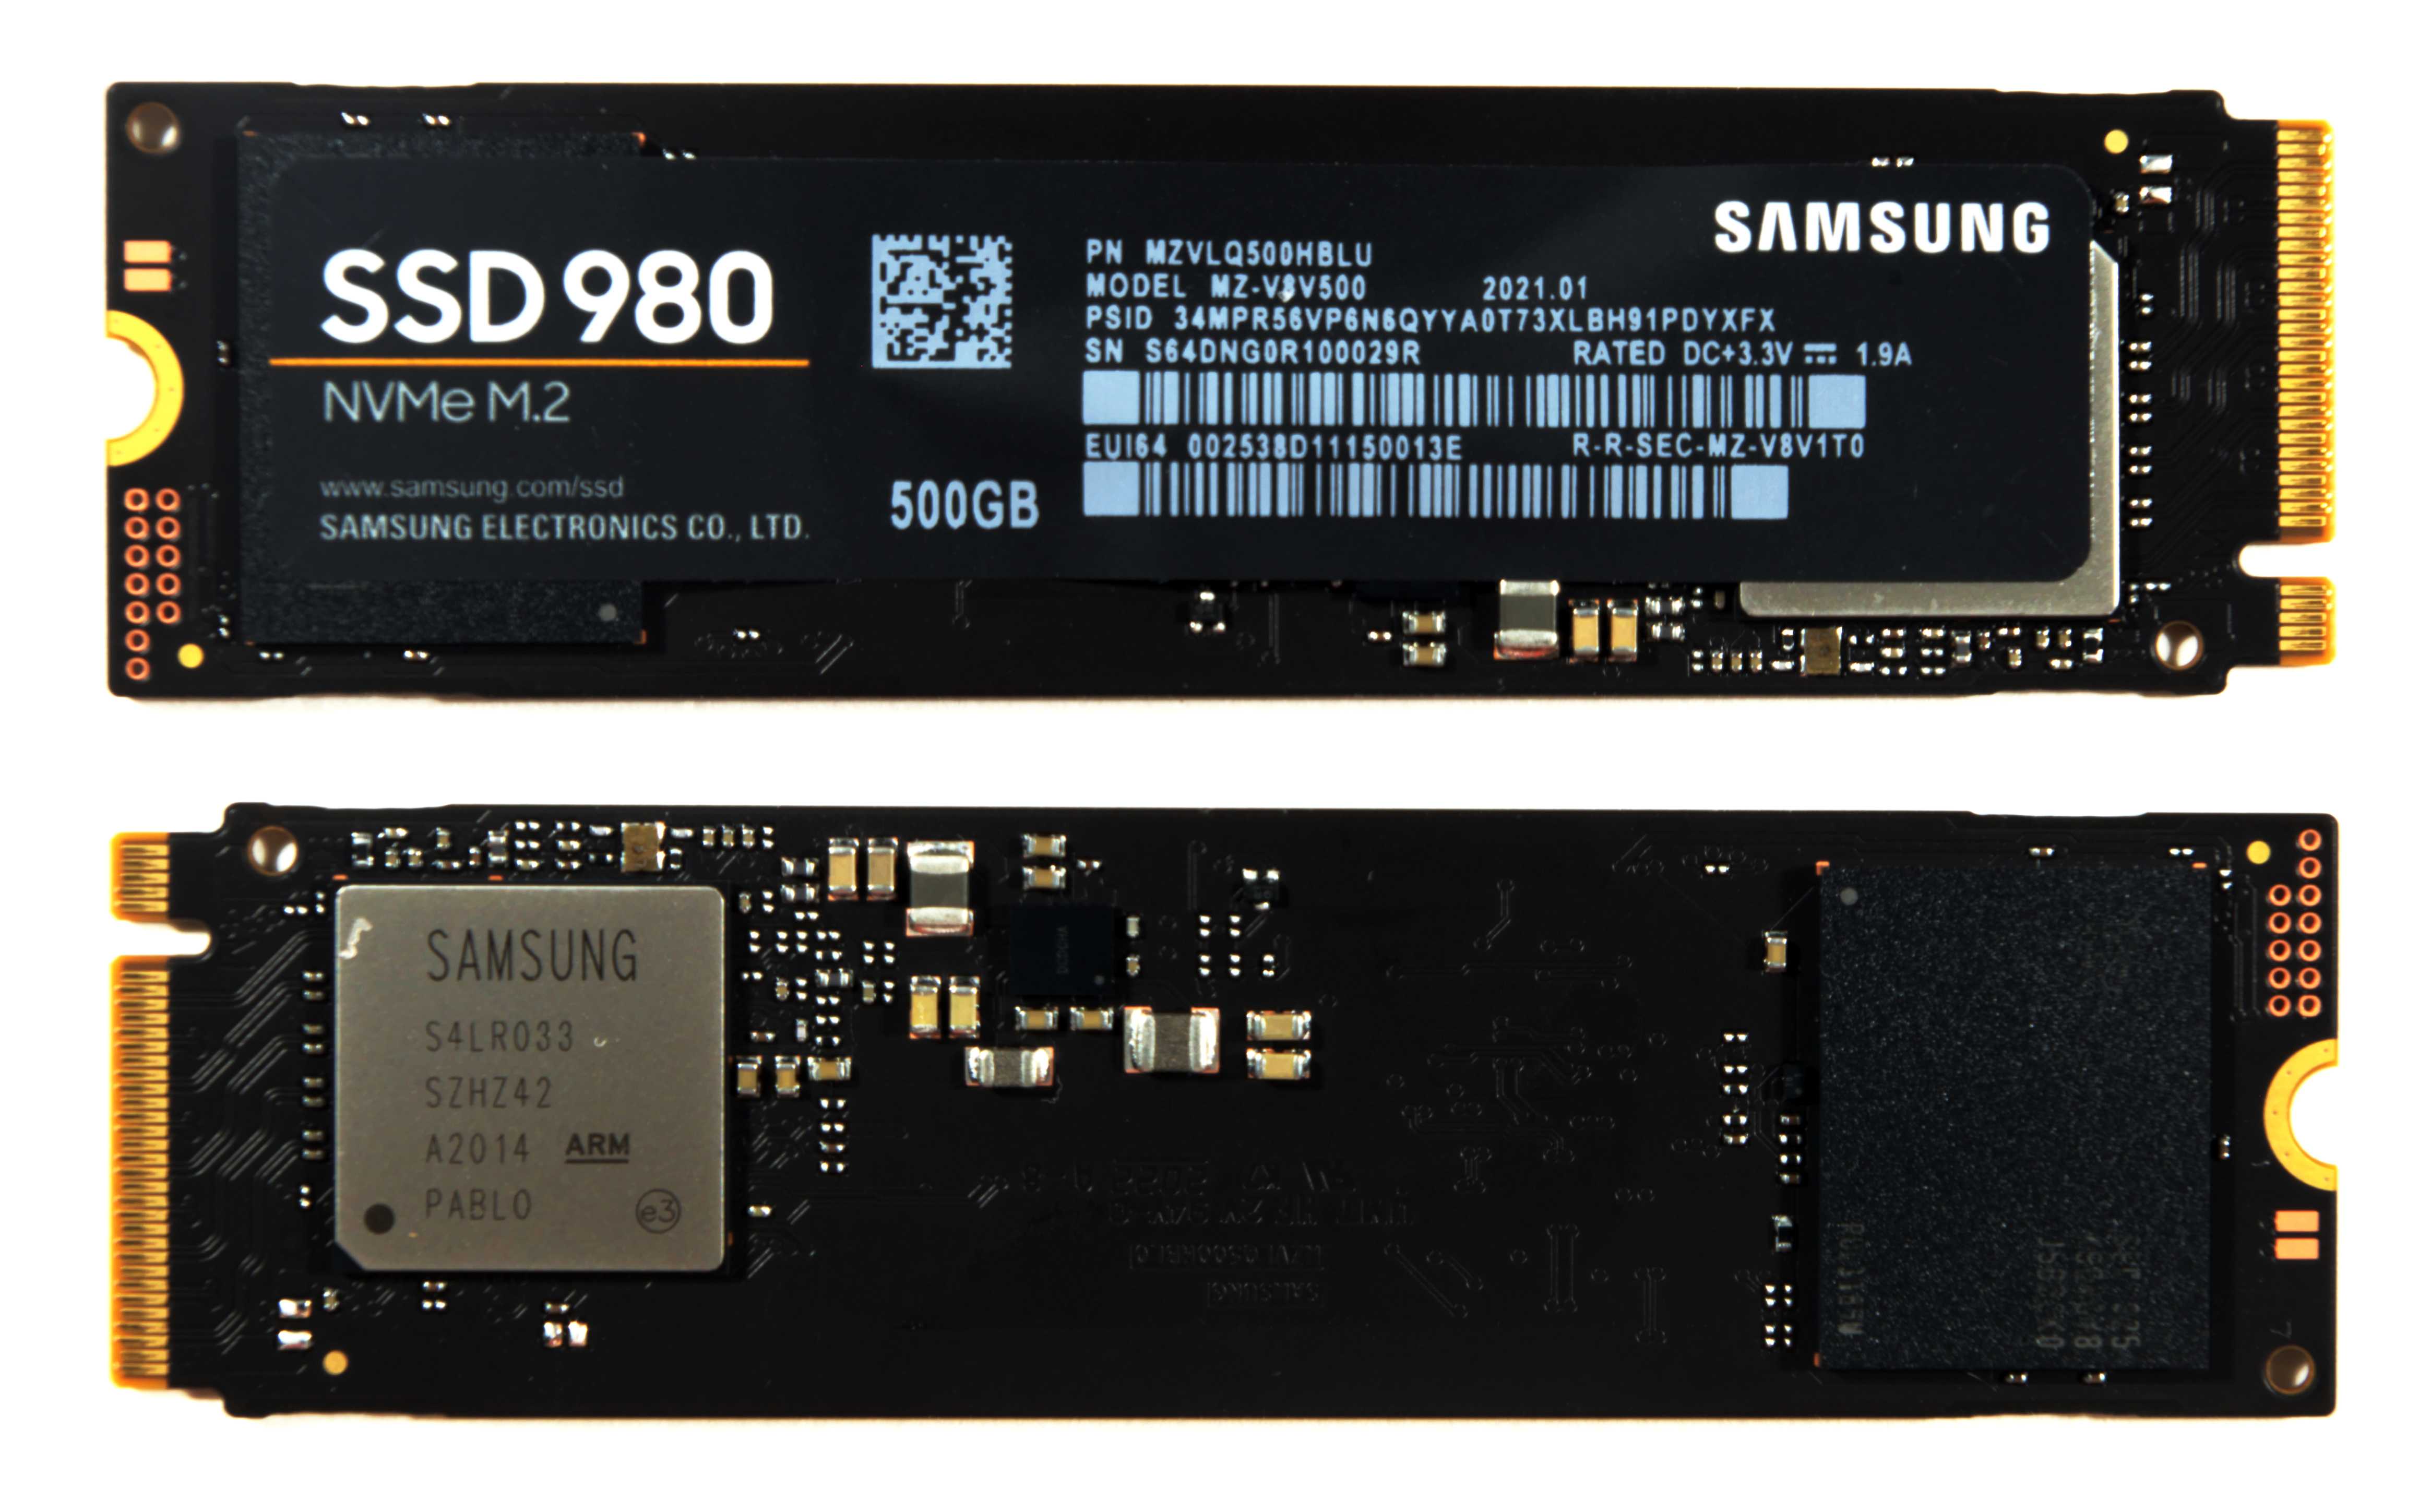 Samsung ssd 980 review - storagereview.com